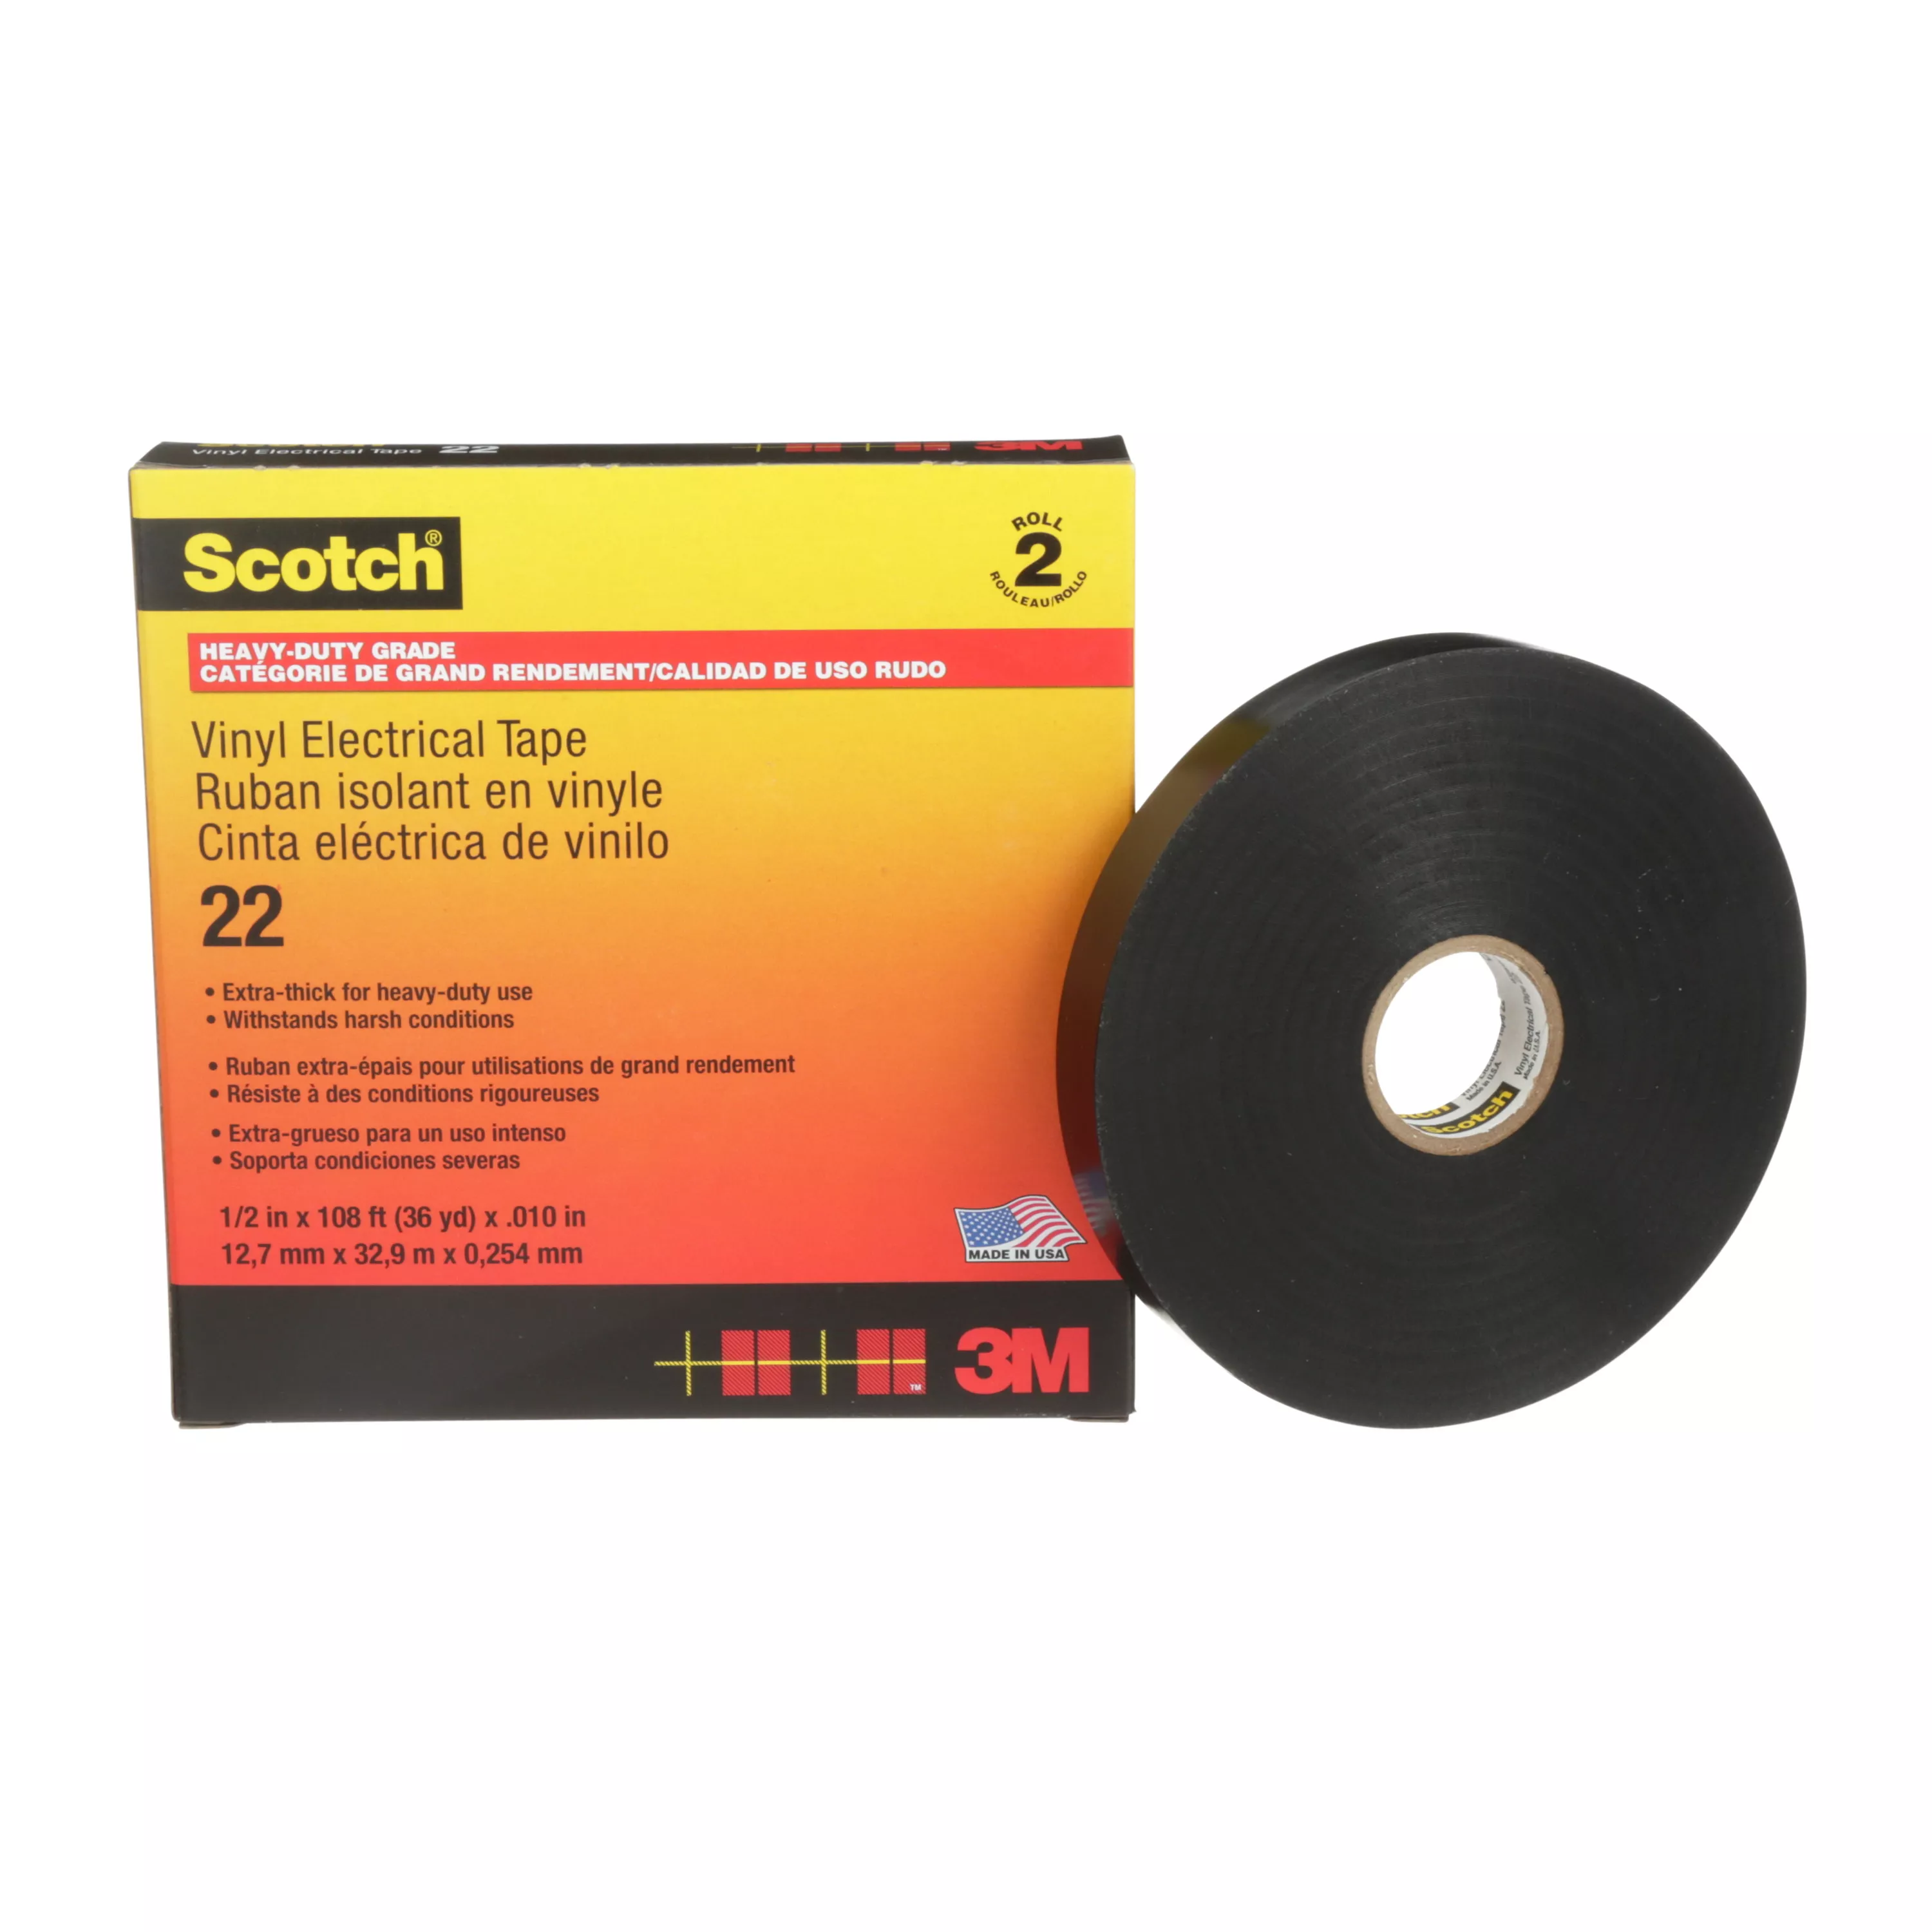 Scotch® Vinyl Electrical Tape 22, 1/2 in x 36 yd, Black, 2 rolls/carton,
48 rolls/Case